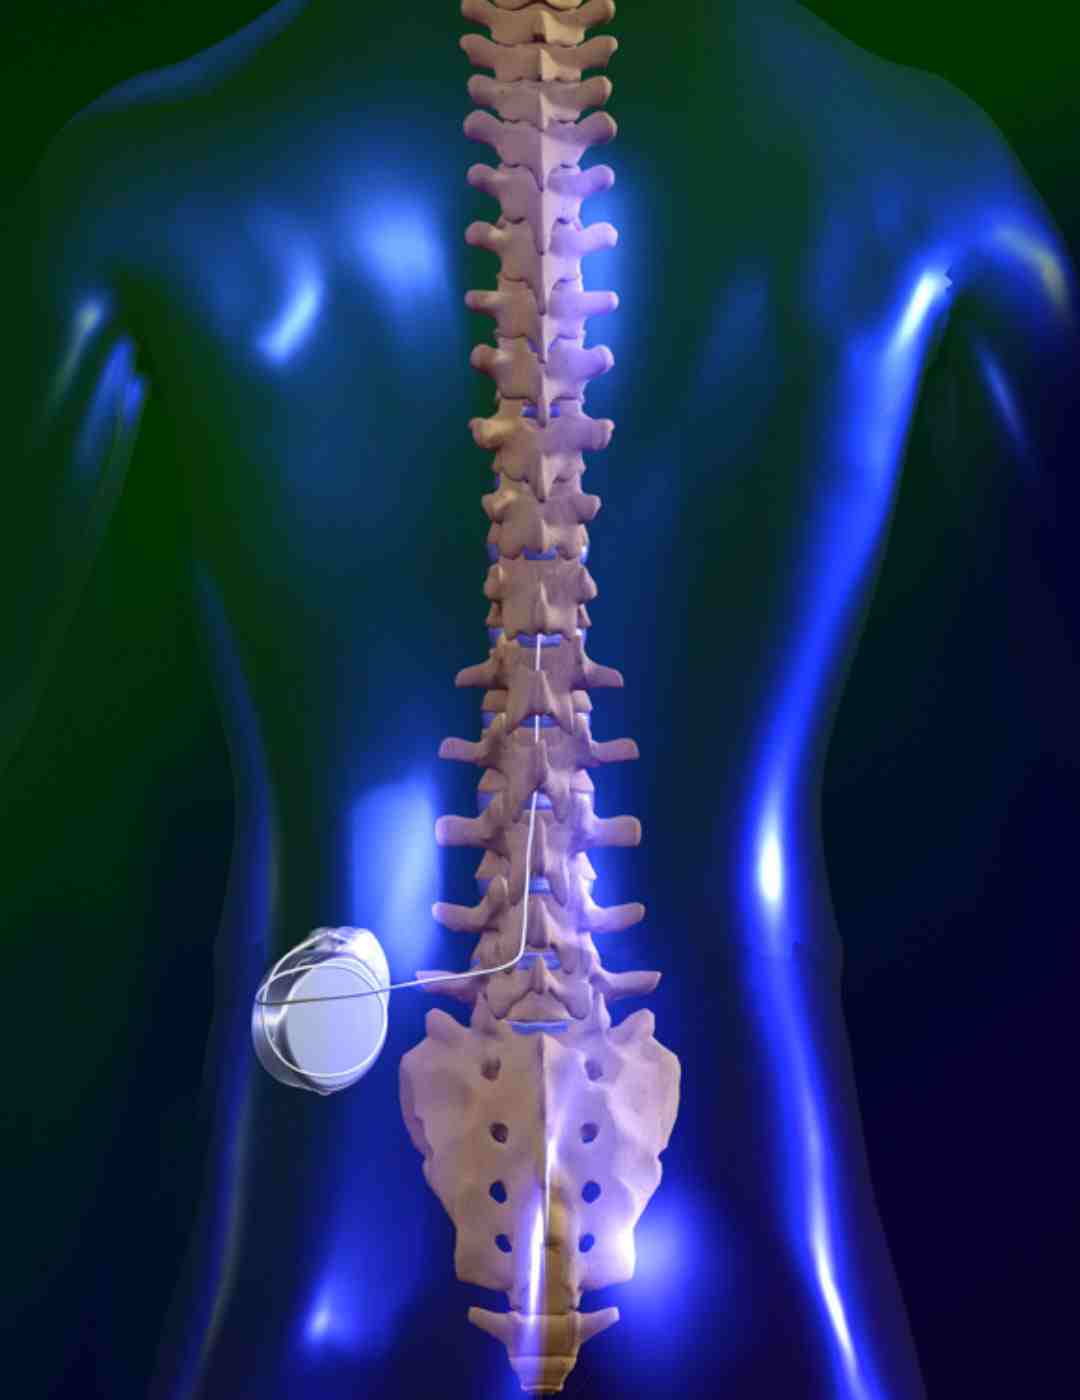 implanting abbott spinal cord stimulator